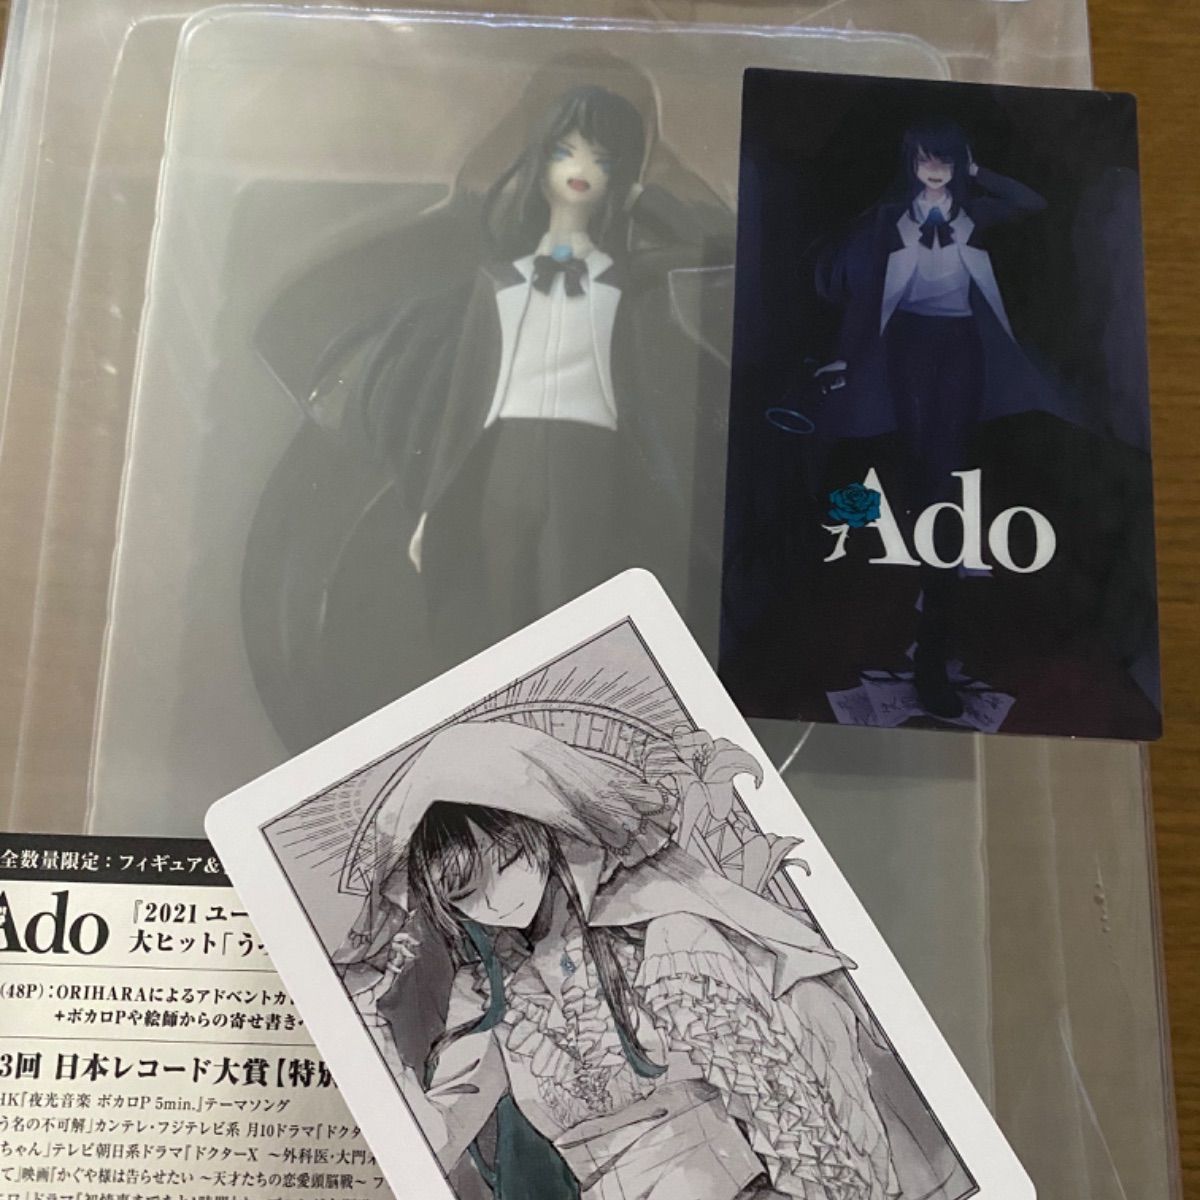 Ado狂言 完全数量限定版フィギュア+人狼カード+特典カード - メルカリ